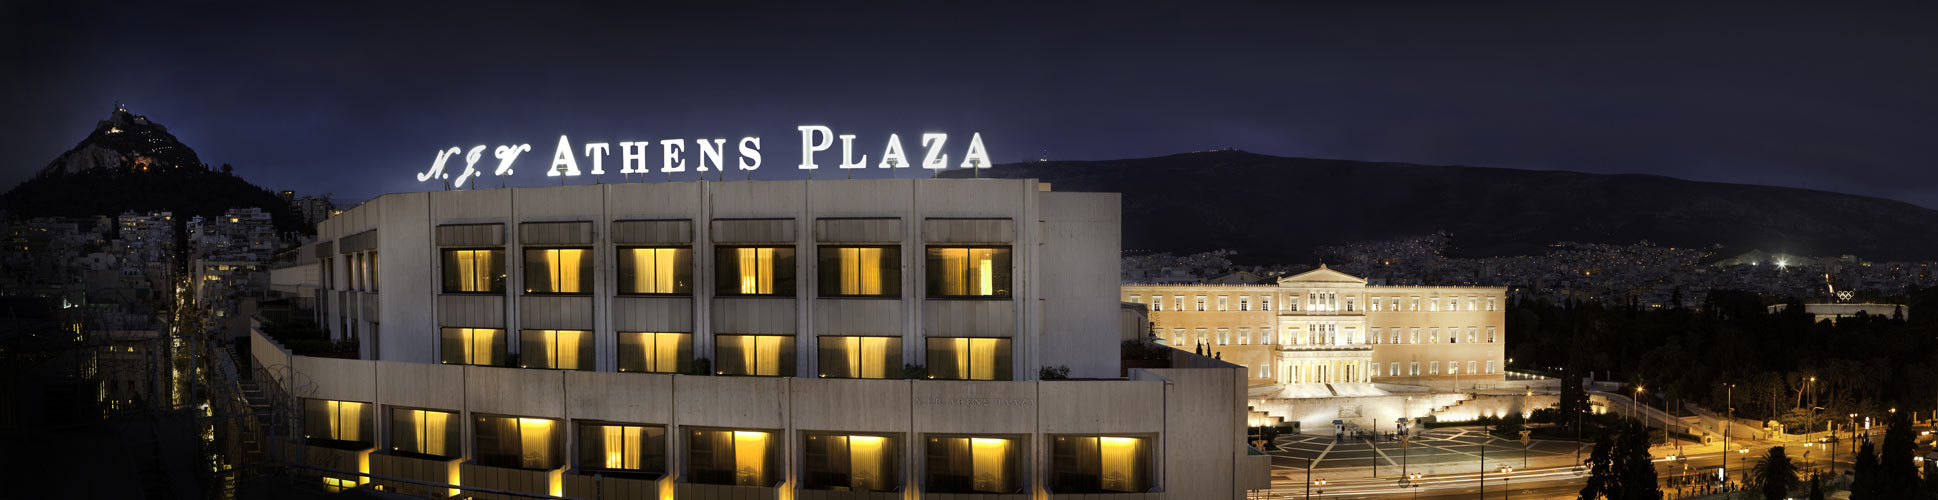 5-star-hotel-athens-plaza-01